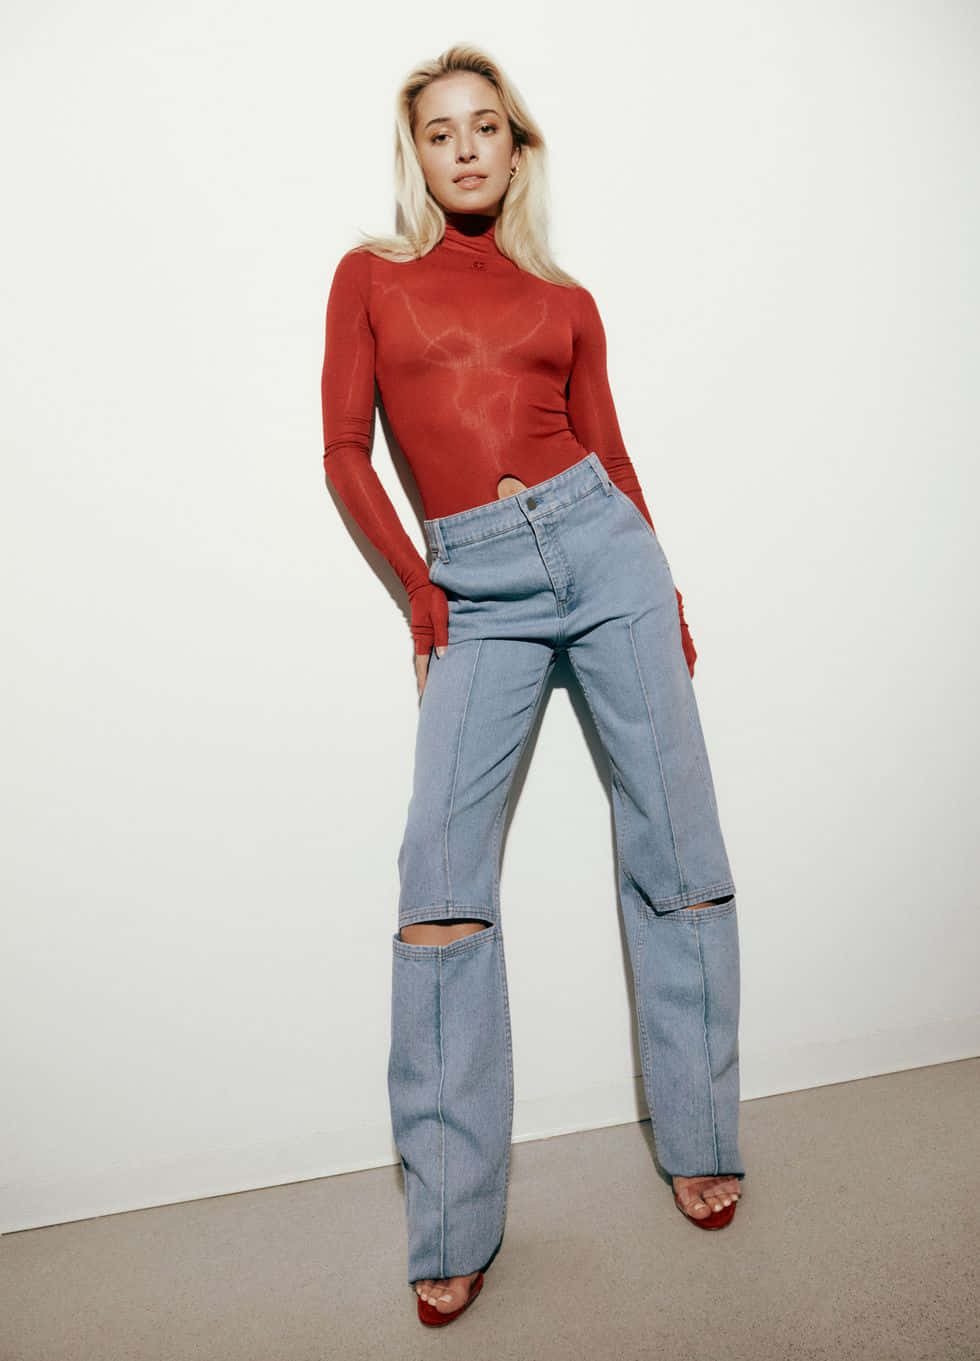 Blonde Womanin Red Turtleneckand Jeans Wallpaper